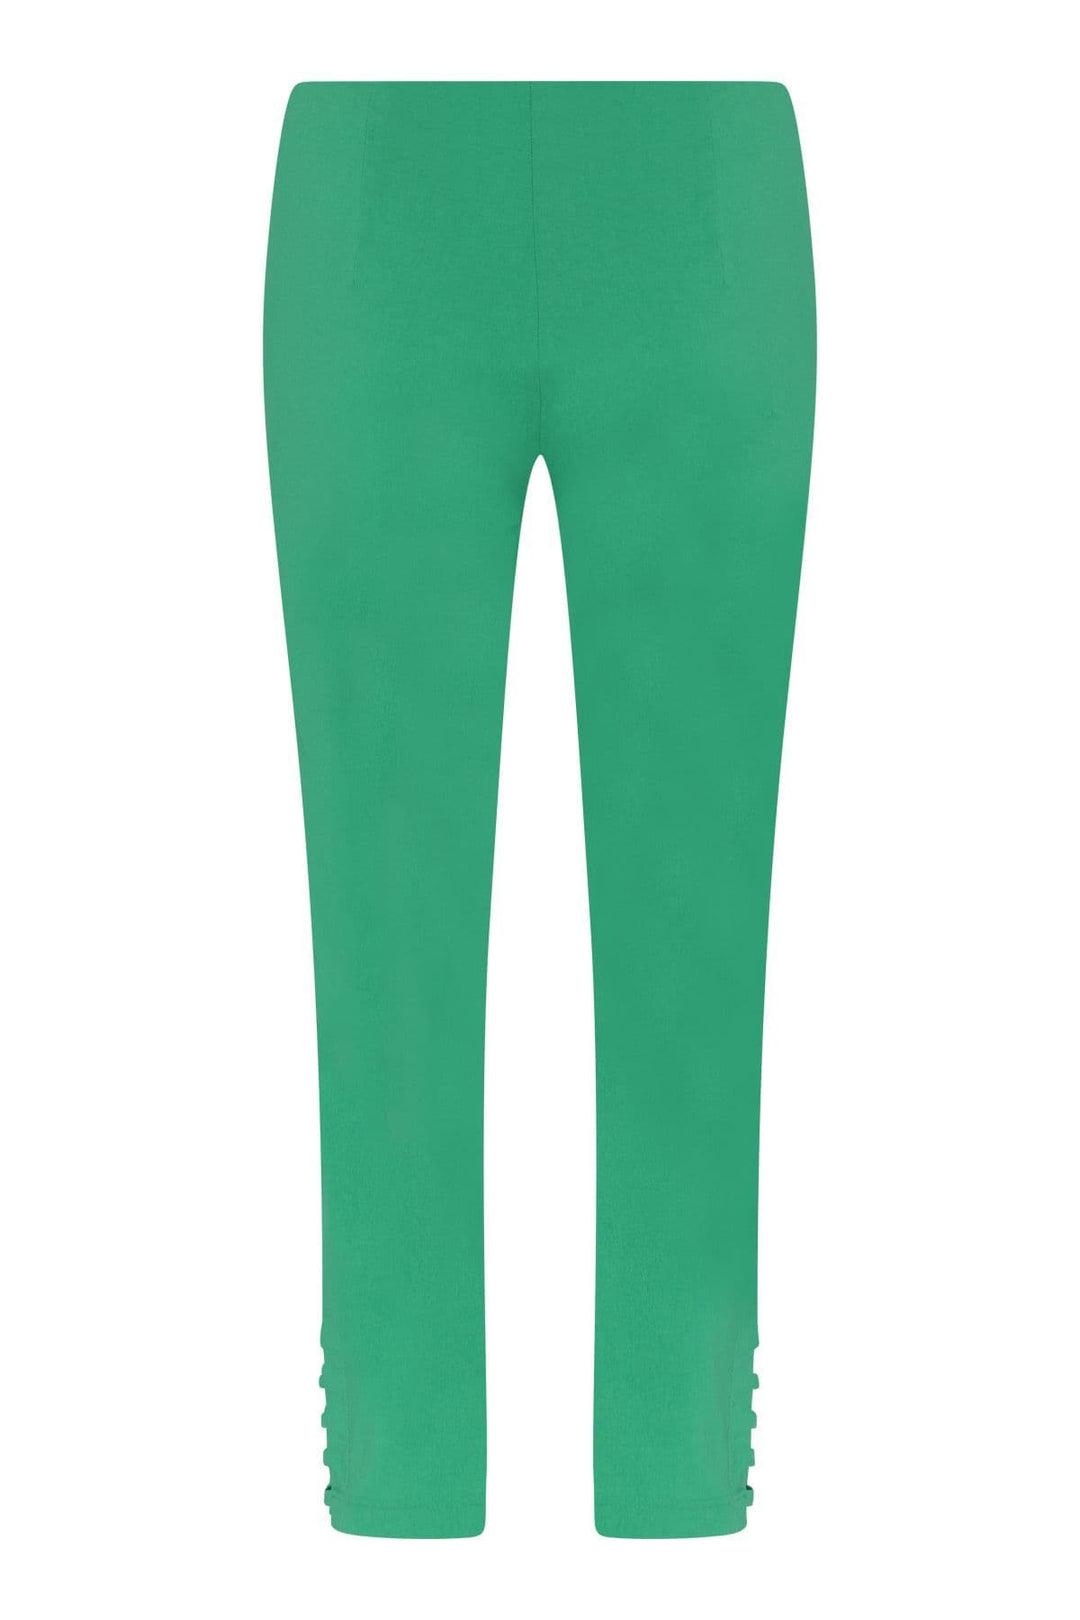 Robell Lena 09 Trousers Green